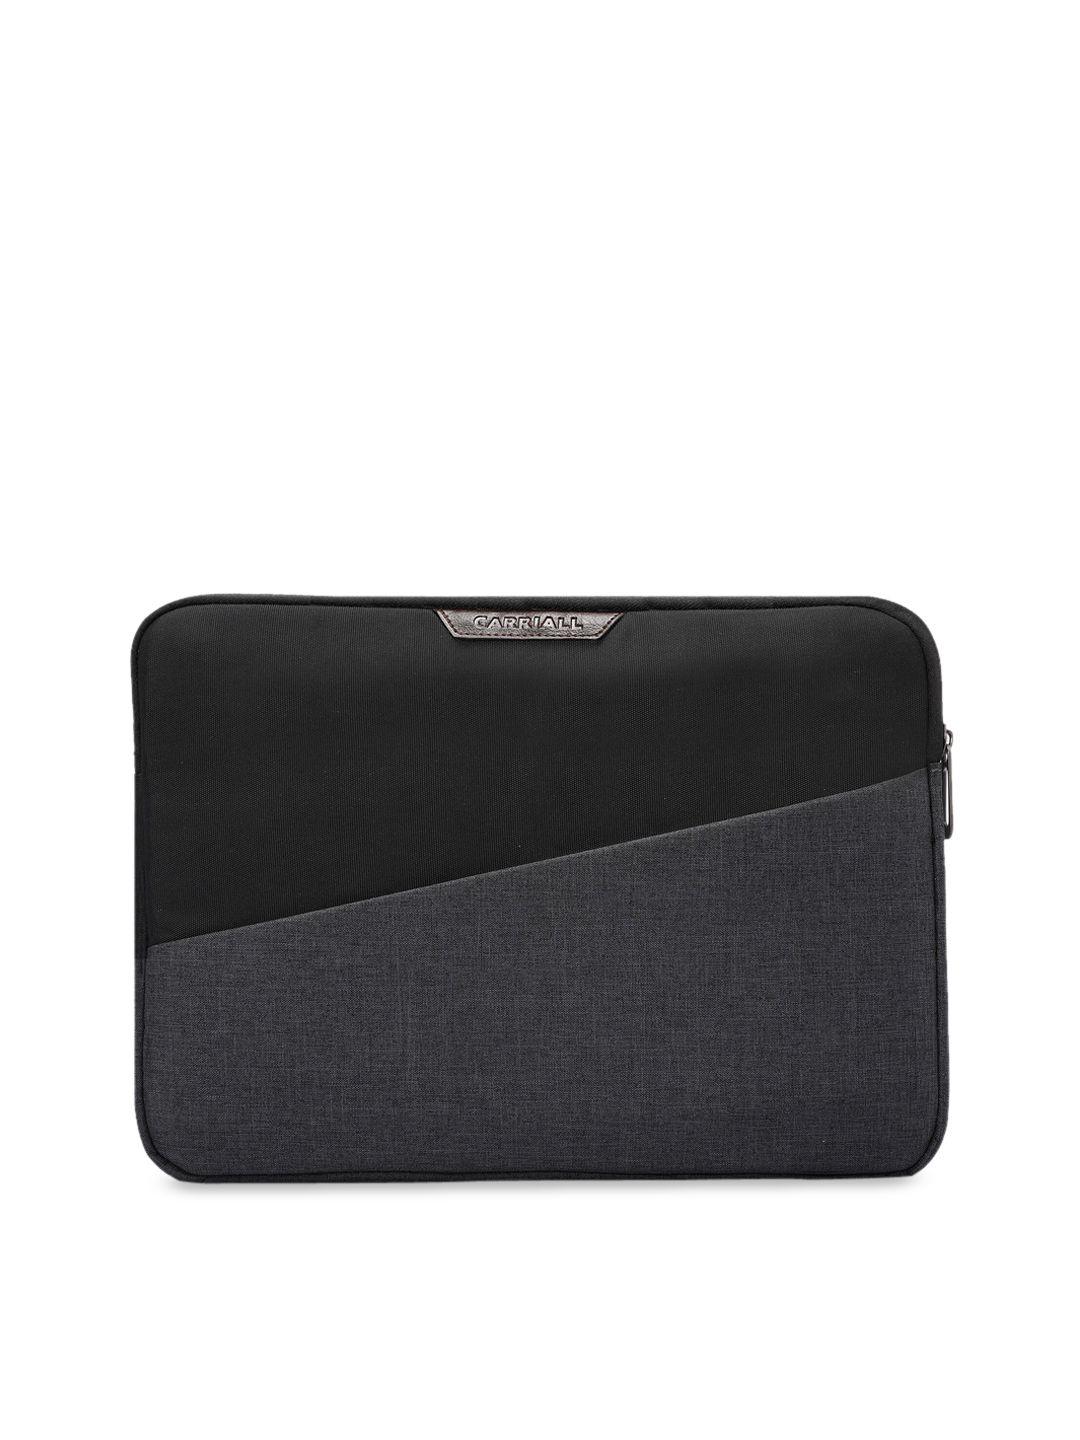 carriall unisex black & grey colourblocked 15 inch laptop sleeve